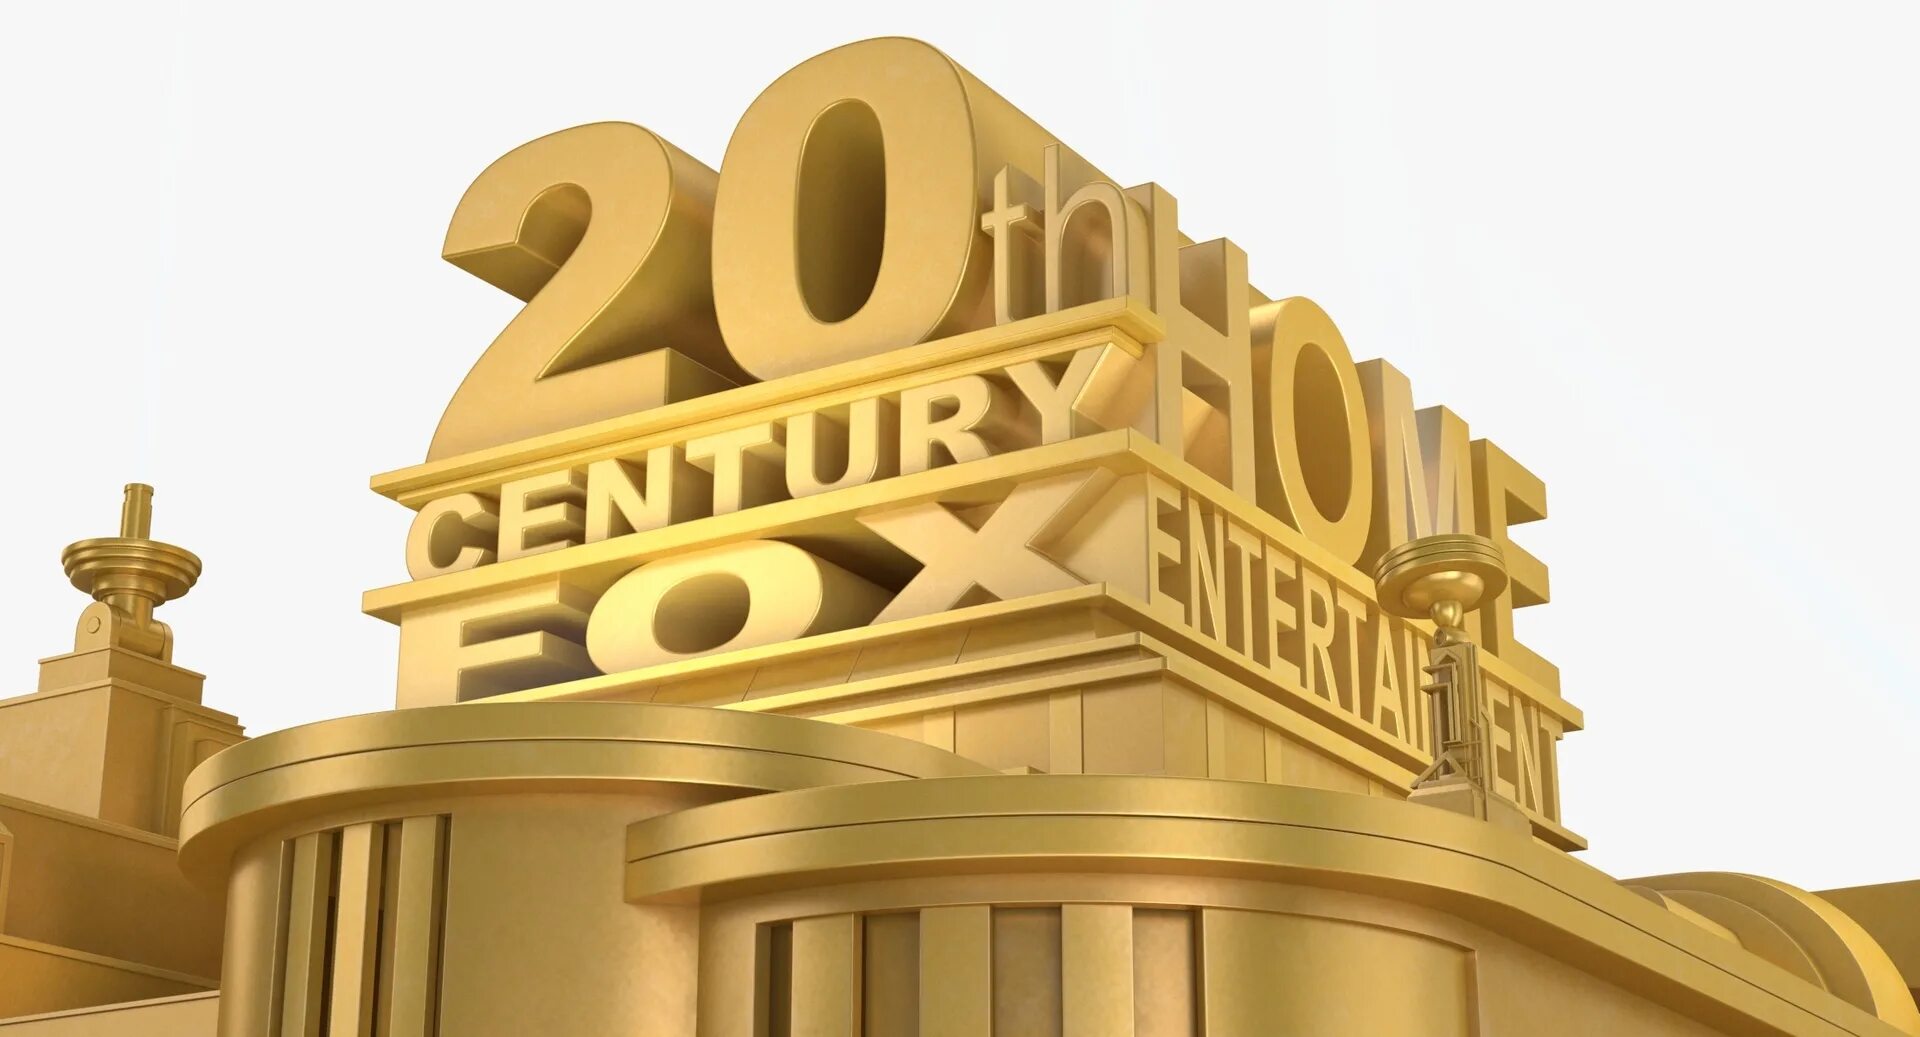 Th fox. Sony 20th Century Fox. 20th Century Fox 3ds. 20th Century Fox logo. 20 Век Фокс Студиос.